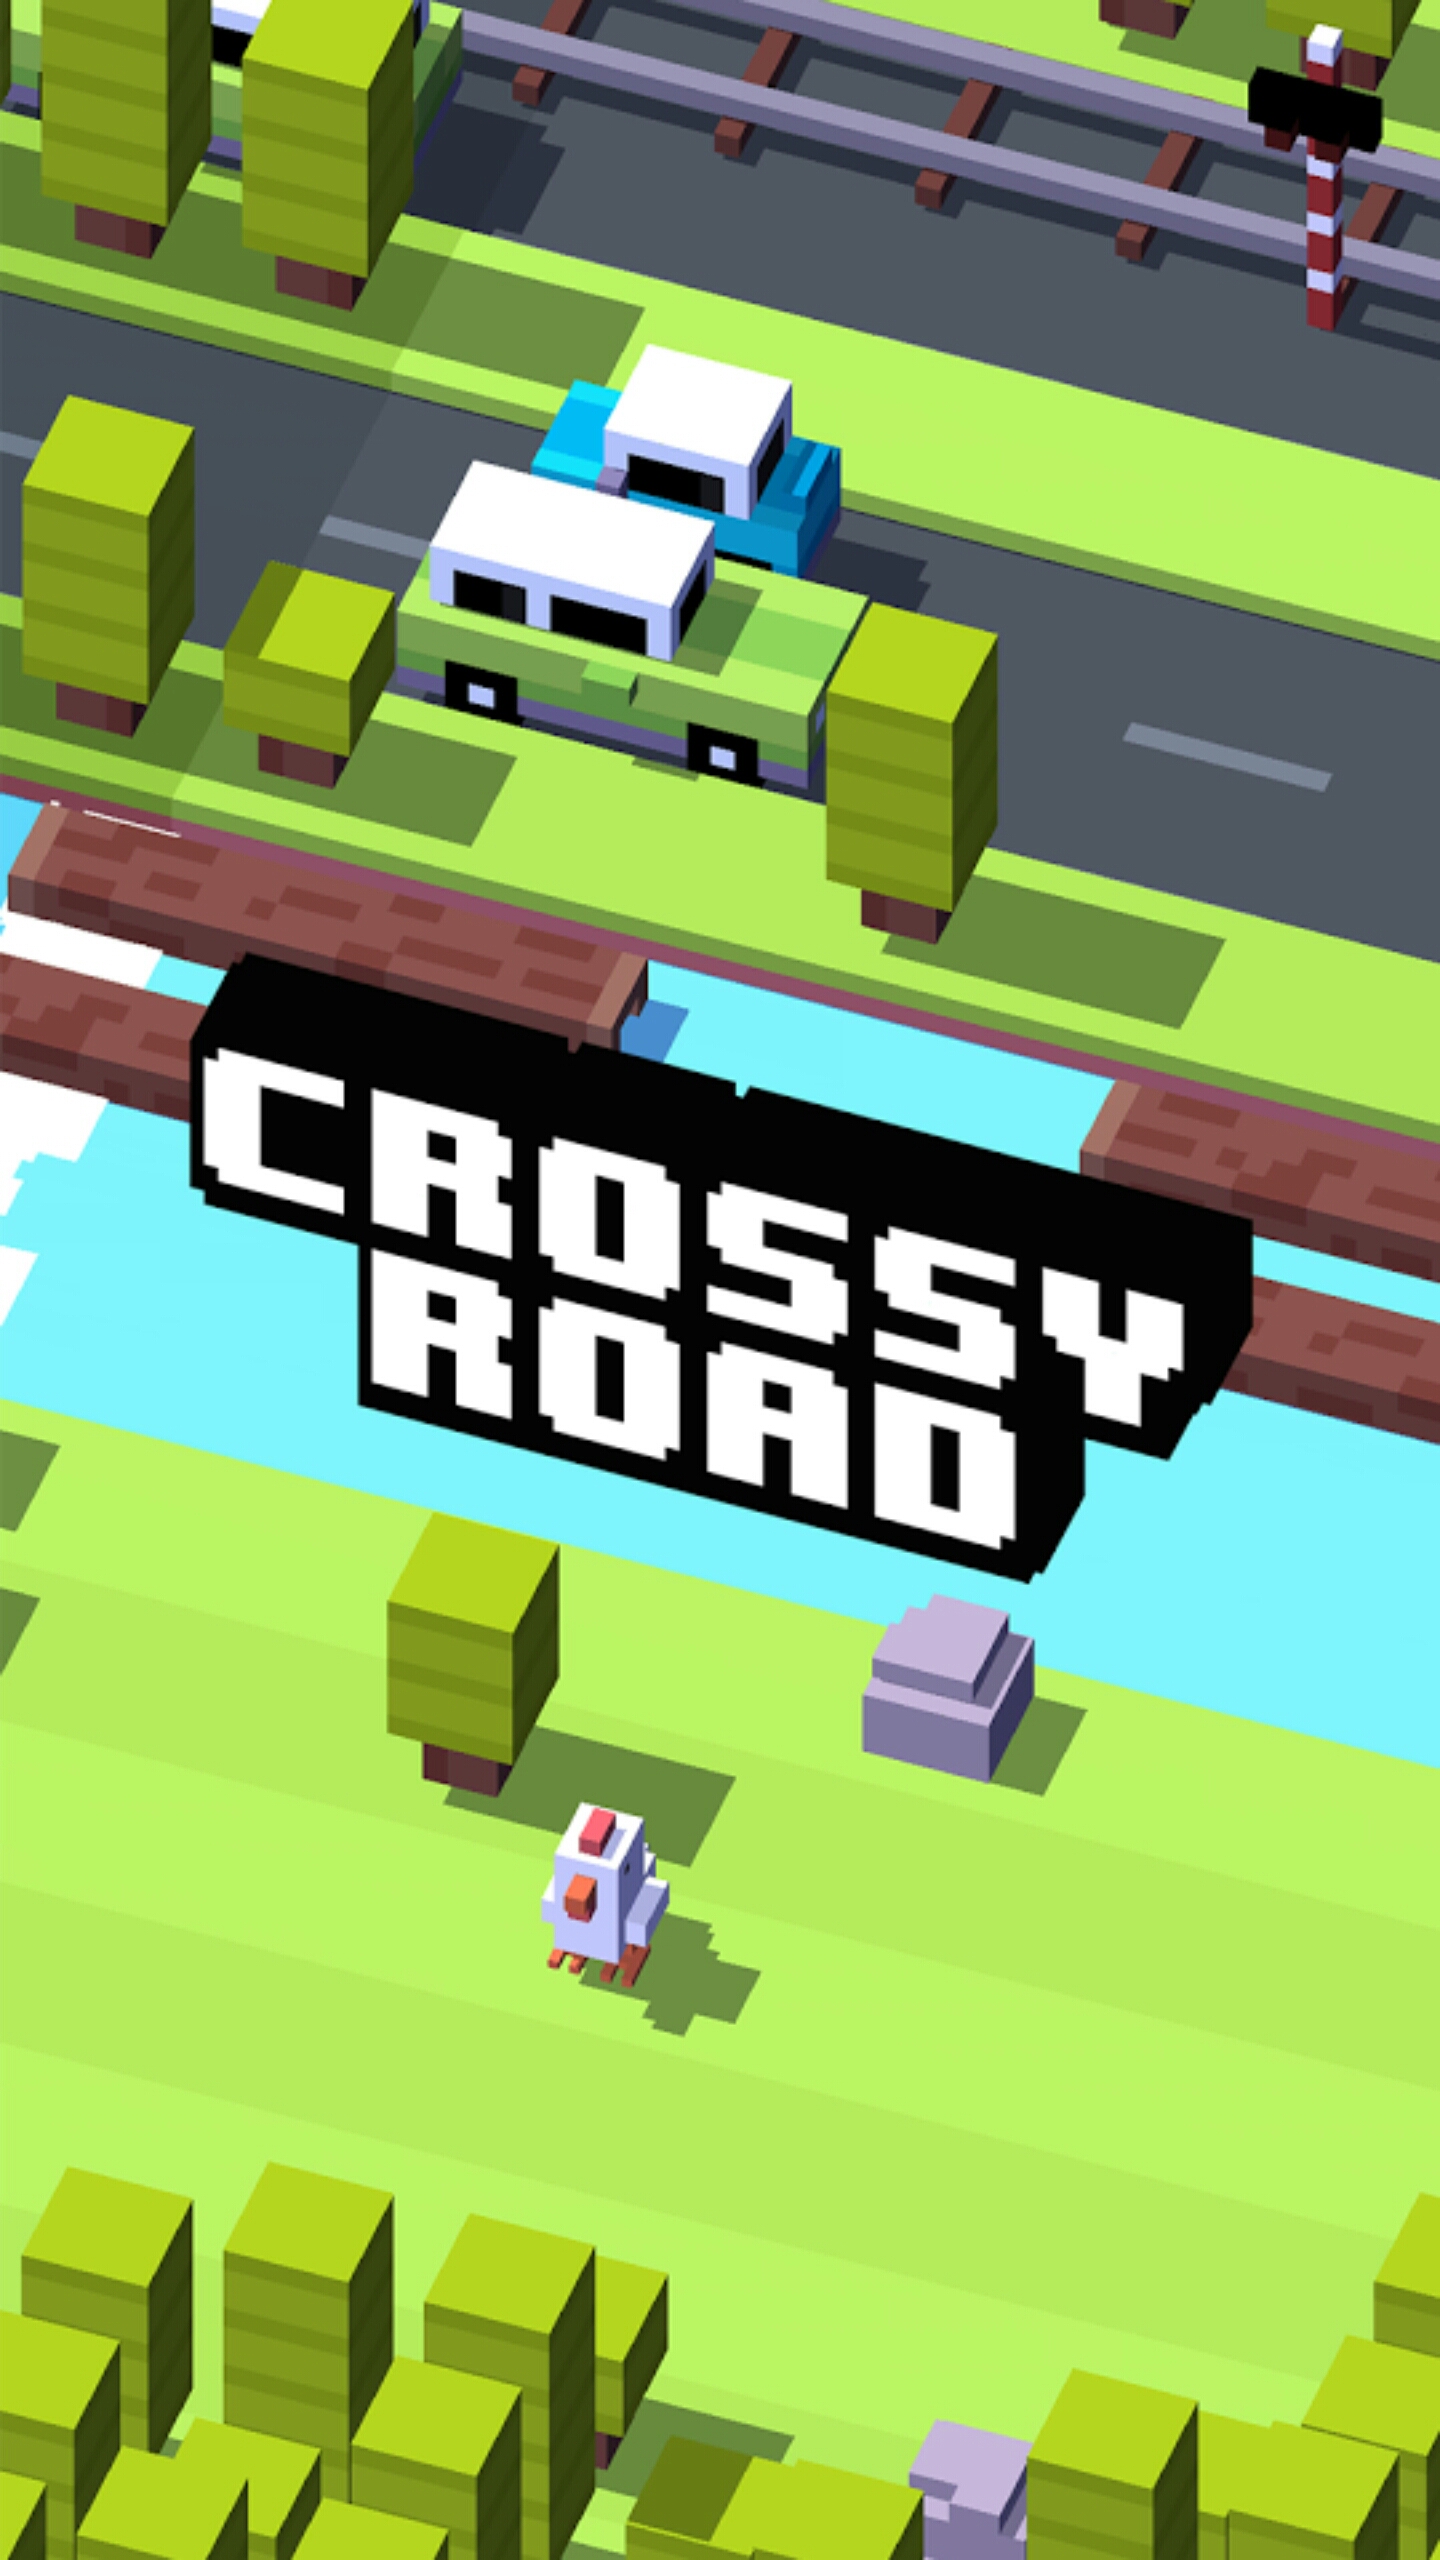 crossy road hacked apk pc